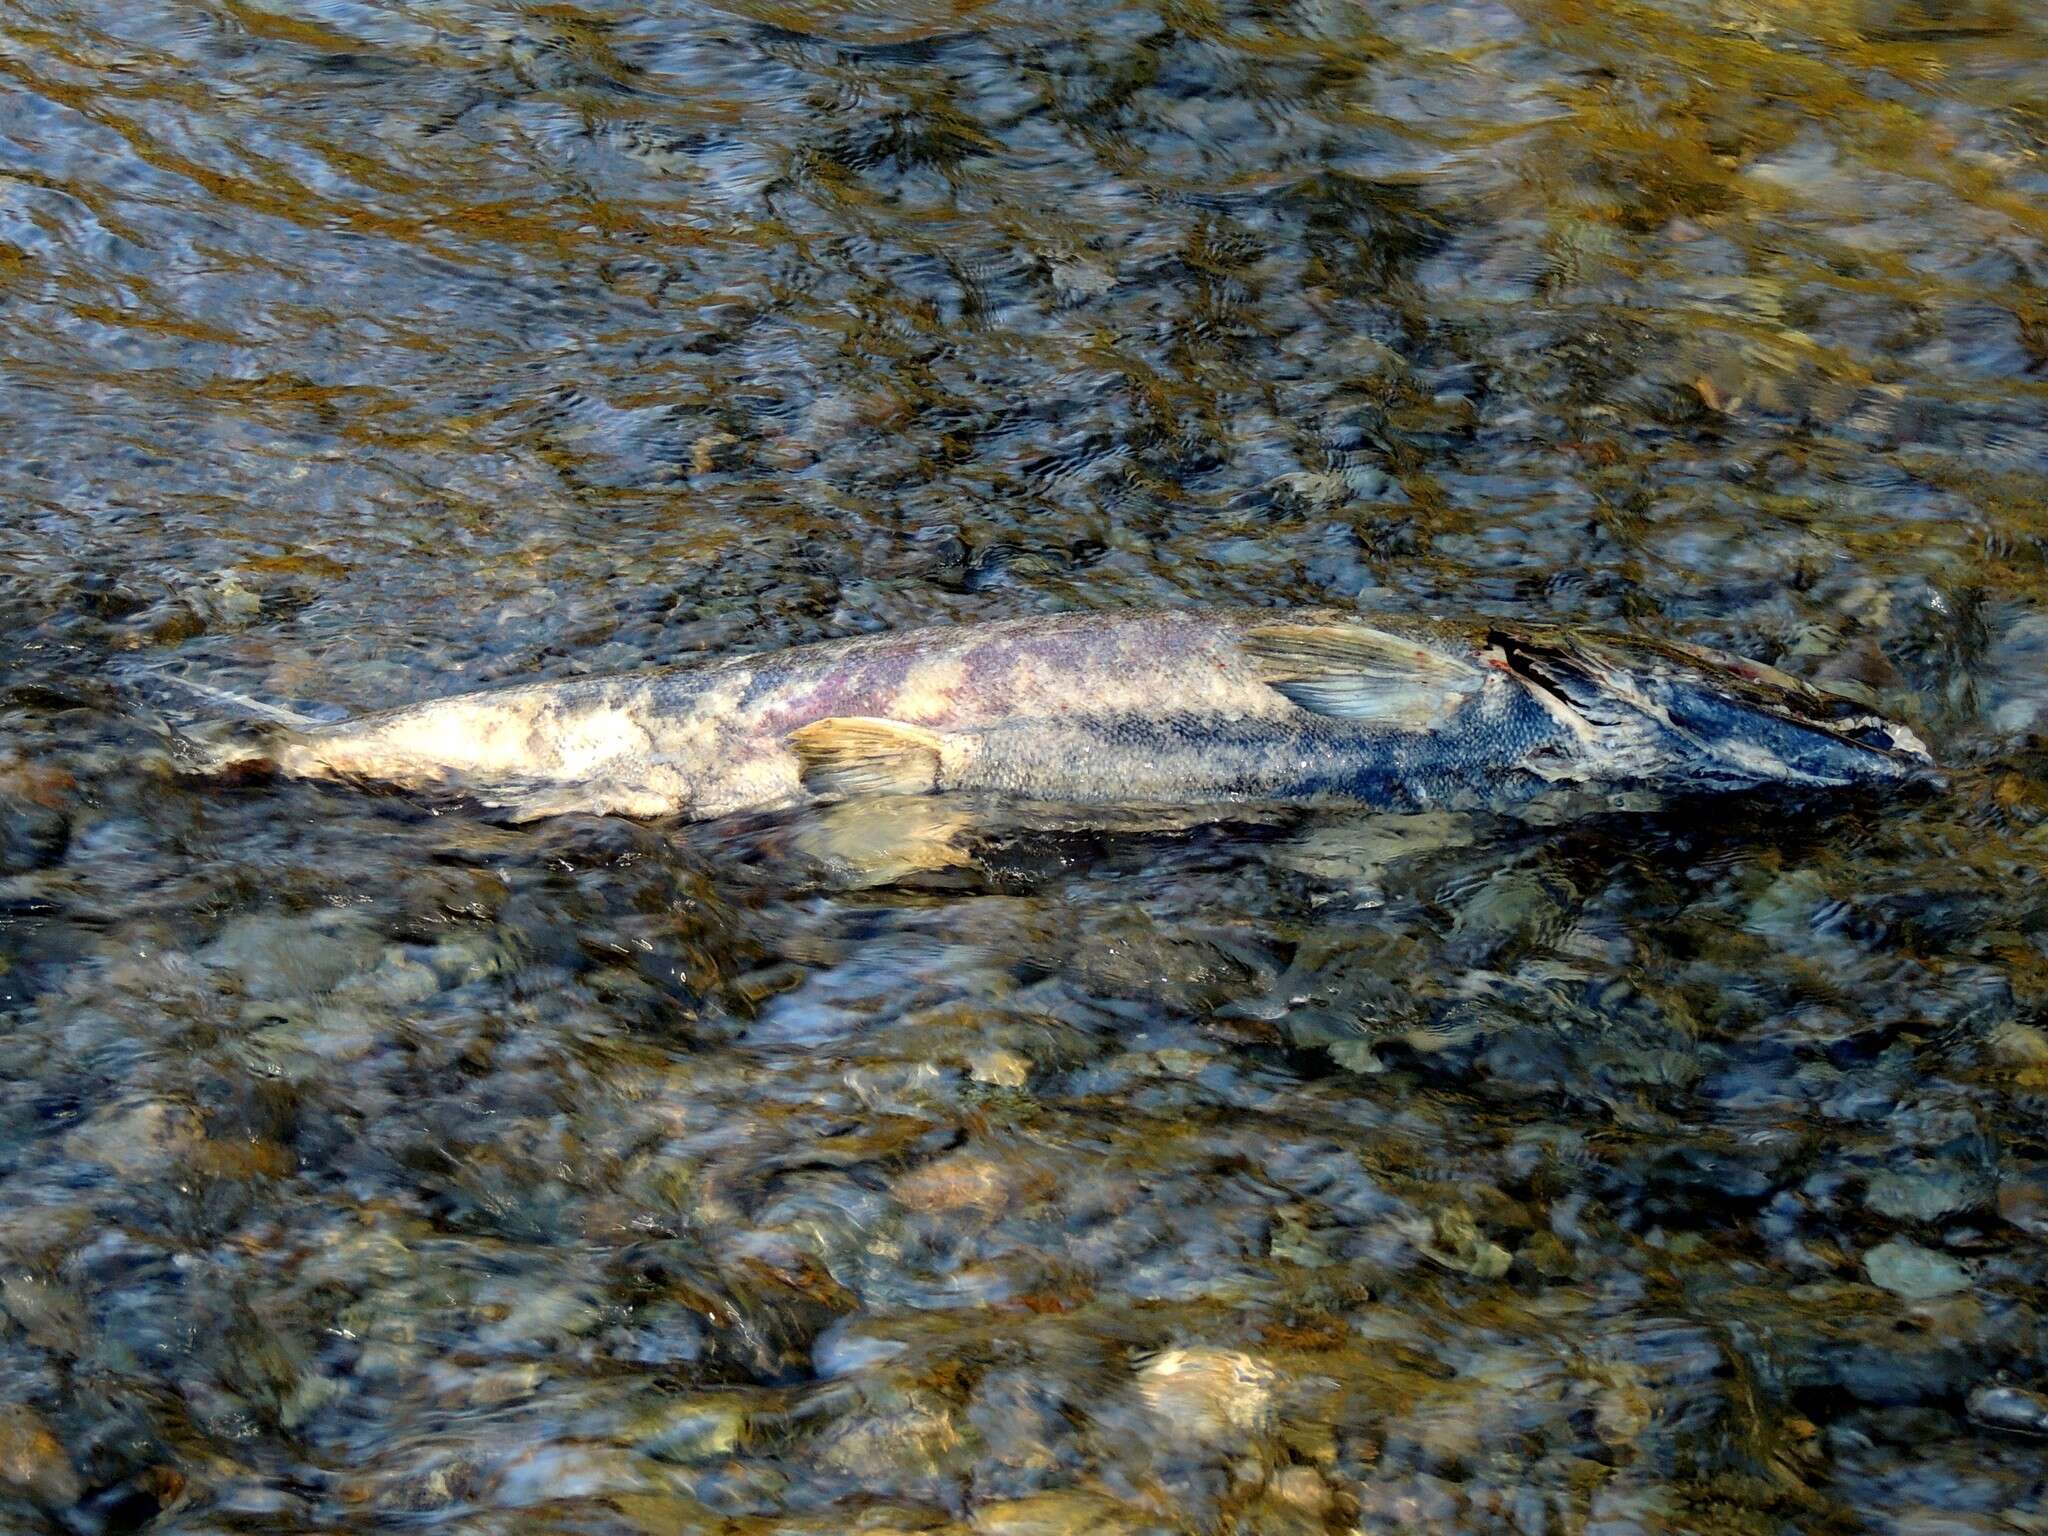 Image of Calico salmon